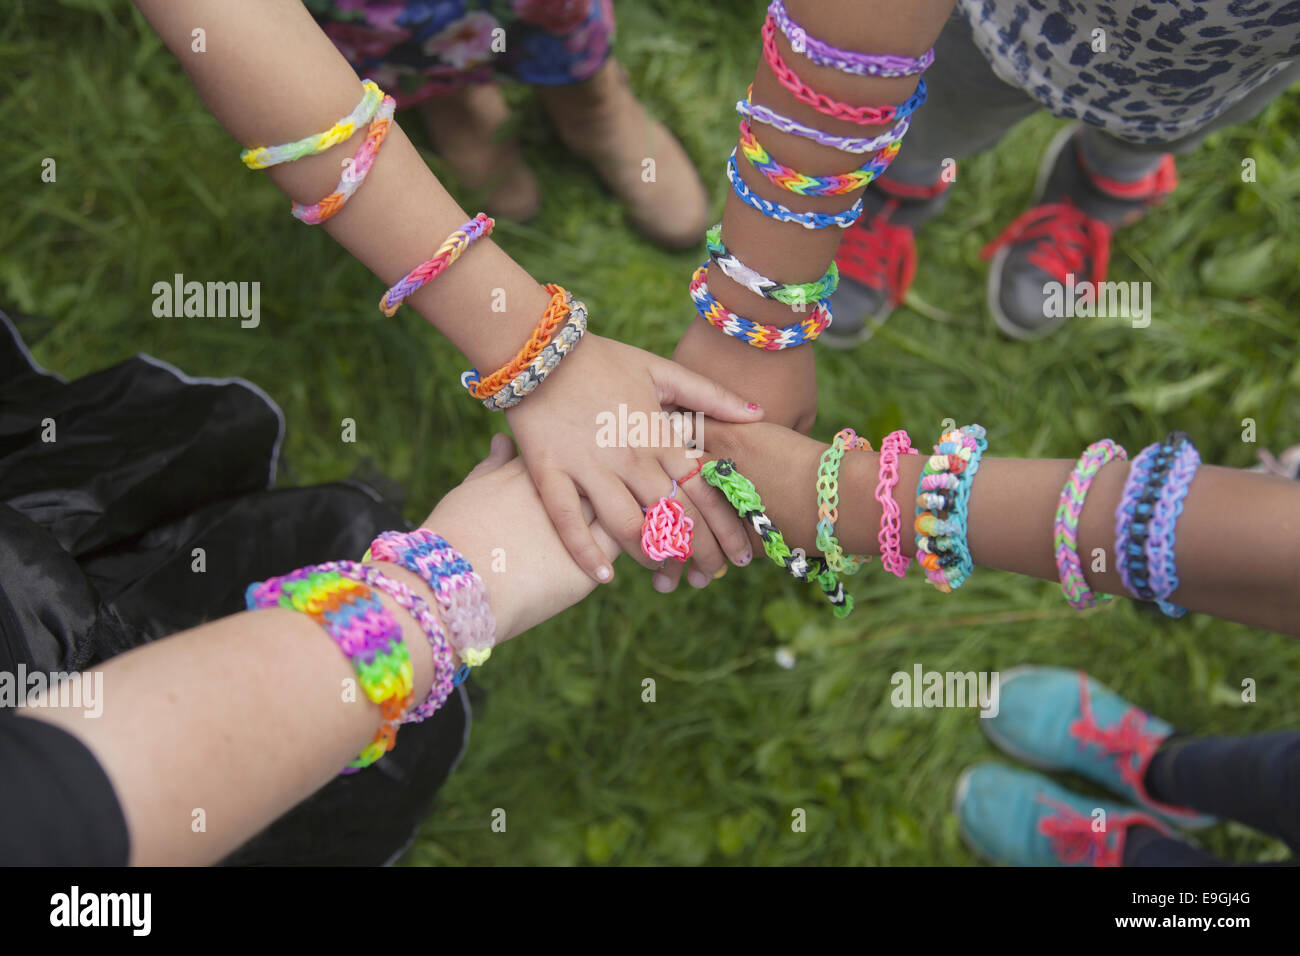 DIY Friendship Bracelets  CraftBitscom